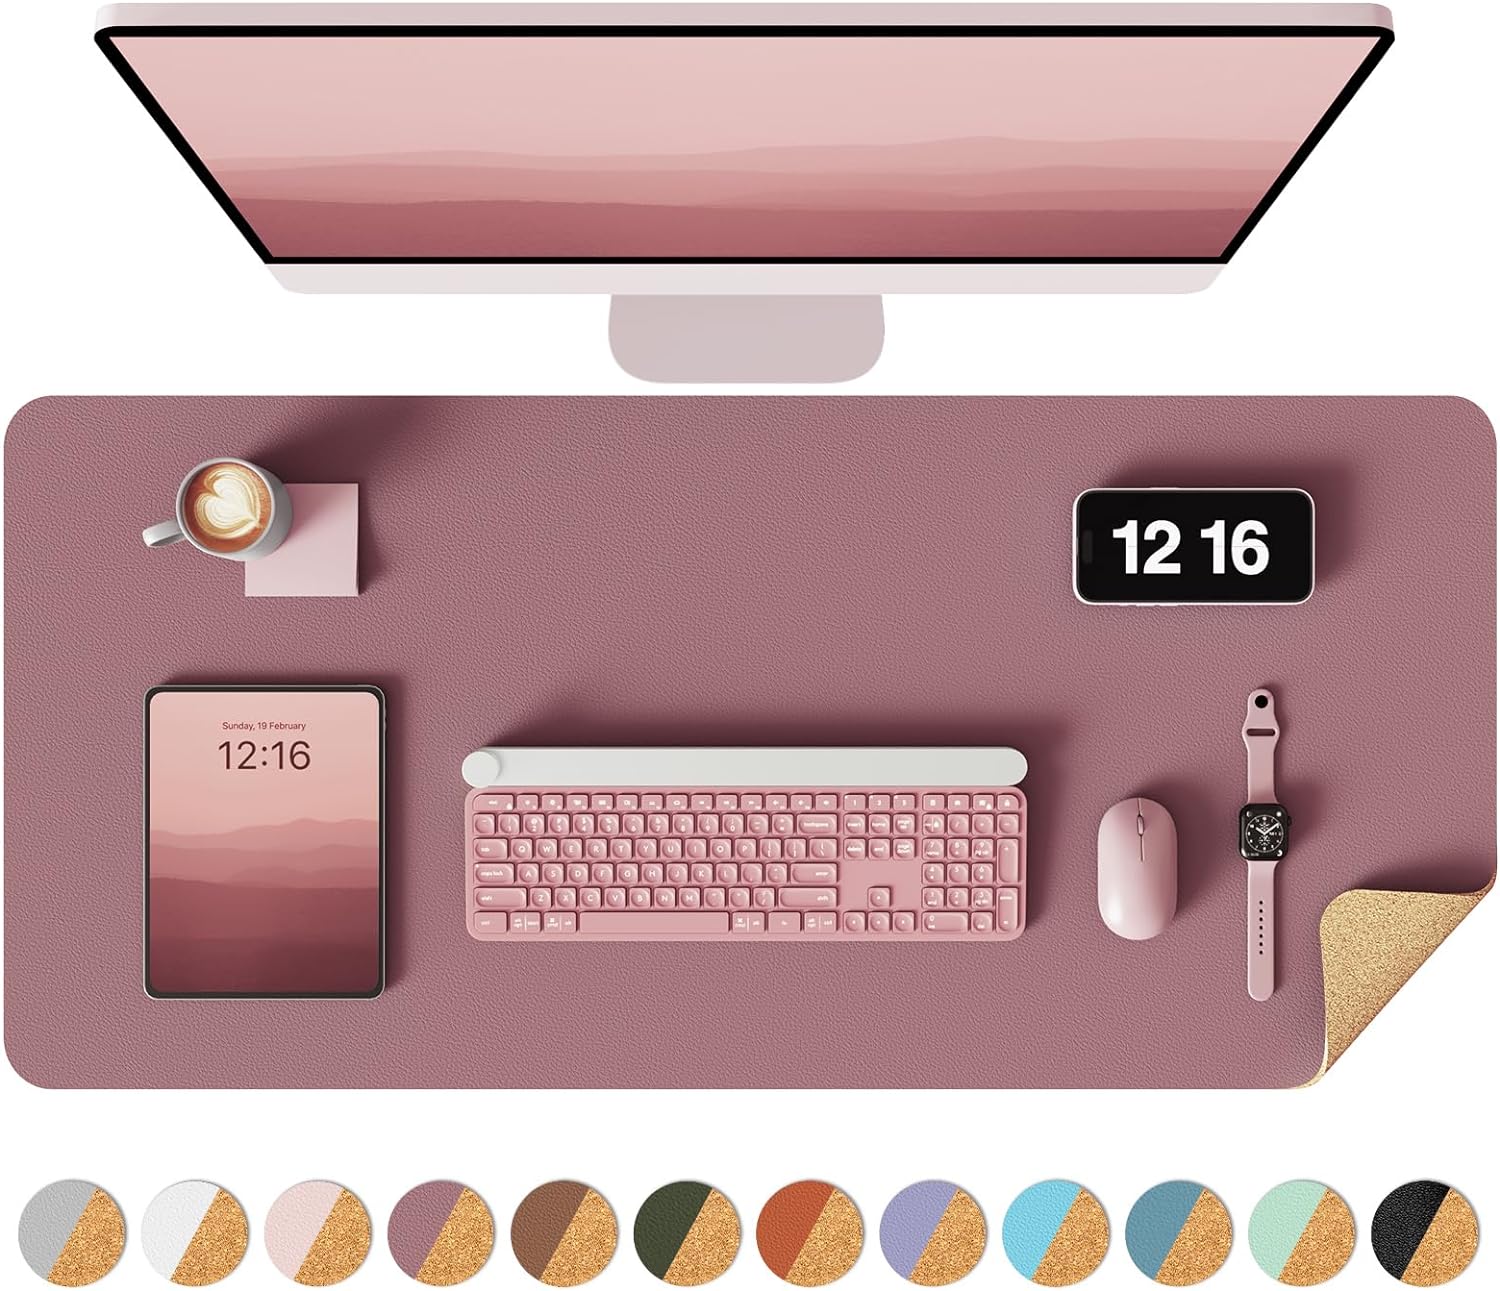 YSAGi Double-Sided Desk Pad, Leather Desk Mat, Eco Cork Desk Pad Protector, Large Mouse Pad for Desk, Waterproof Desk Blotter Pad, Desk Writing Pad for Office Work&Home(23.6"x13.7",Cork+Dark Pink)